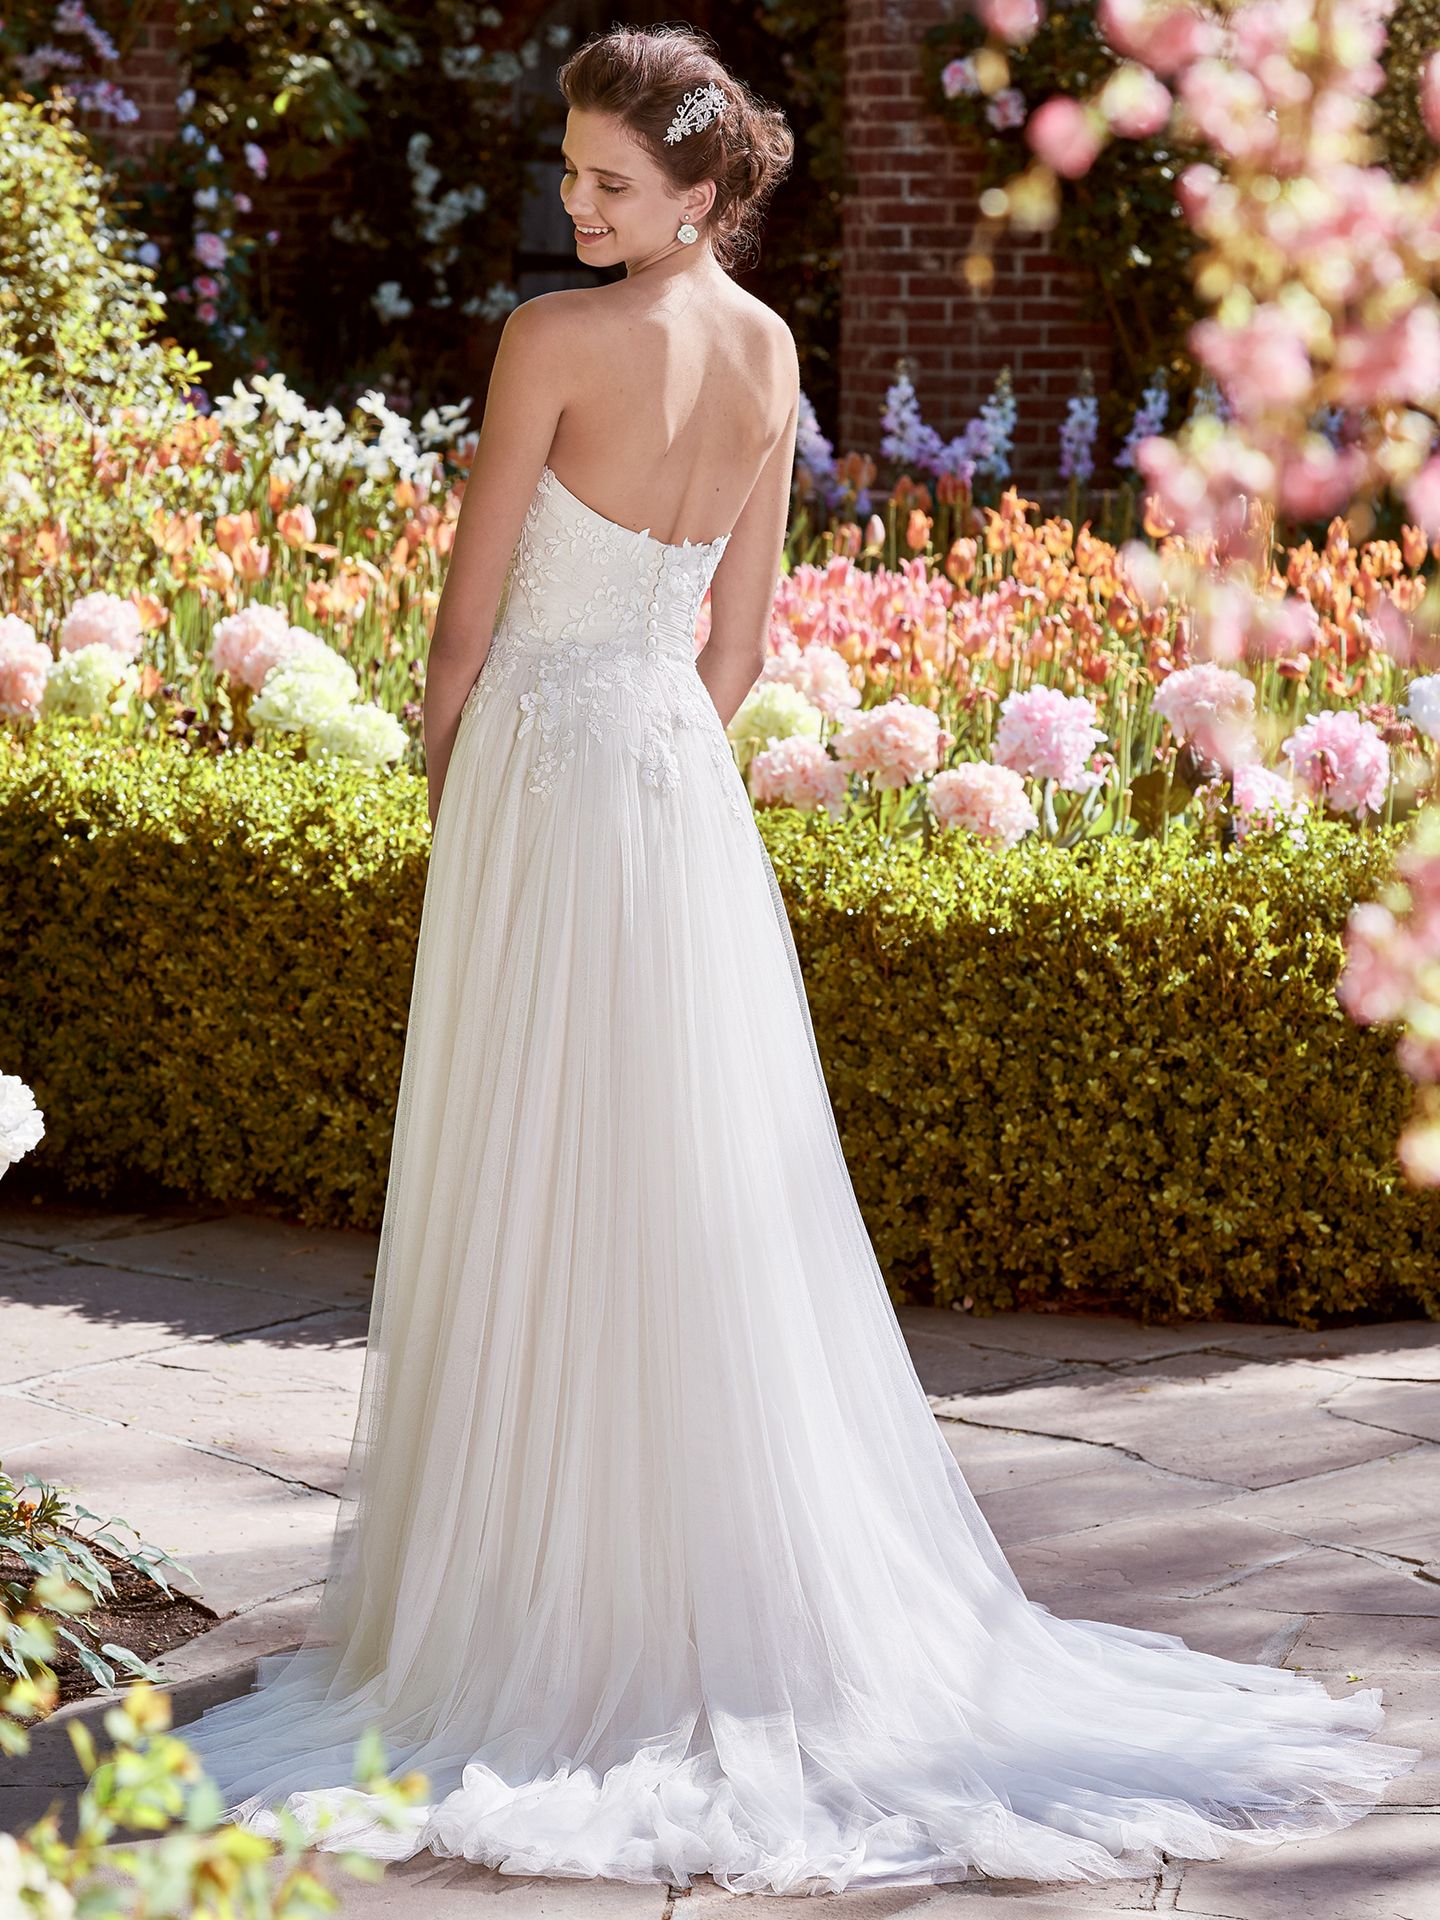 3 Beautiful Dresses for 3 Budget Weddings - Sigrid wedding dress by Rebecca Ingram